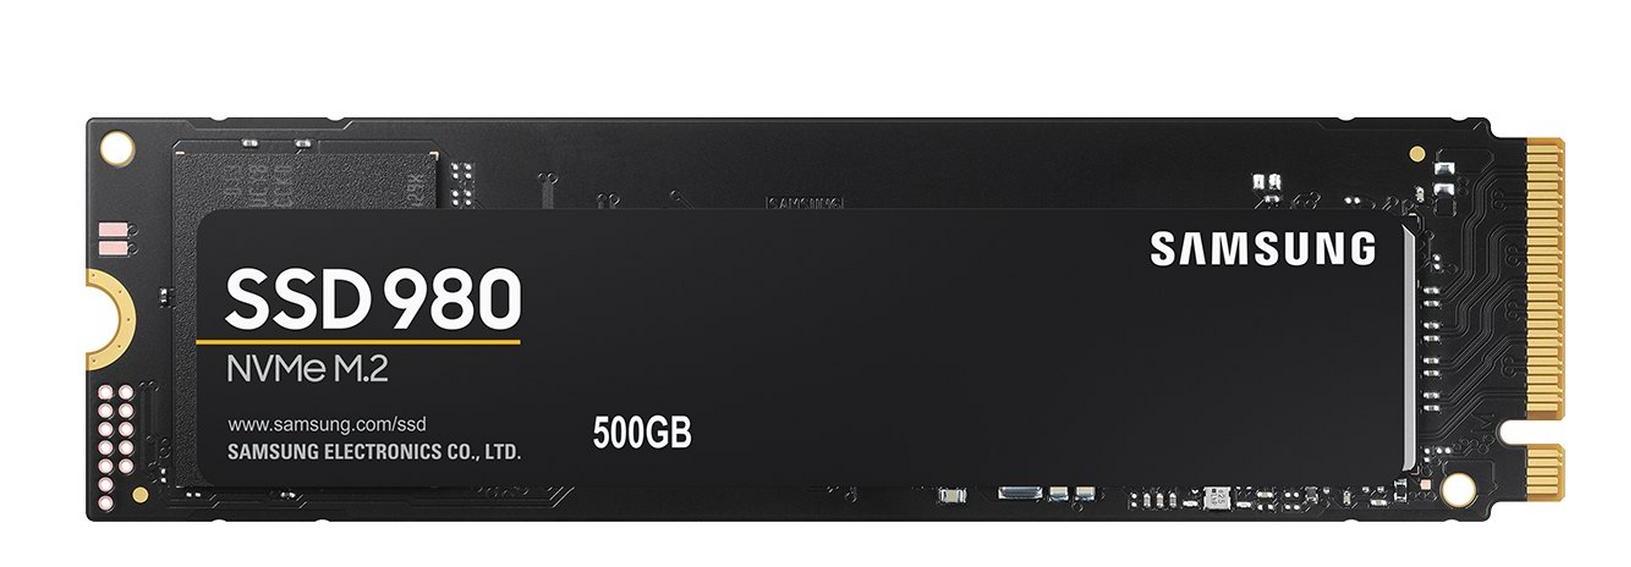 Samsung980 500GB PCIe 3.0 NVMe M.2 Internal SSD £52 post thumbnail image